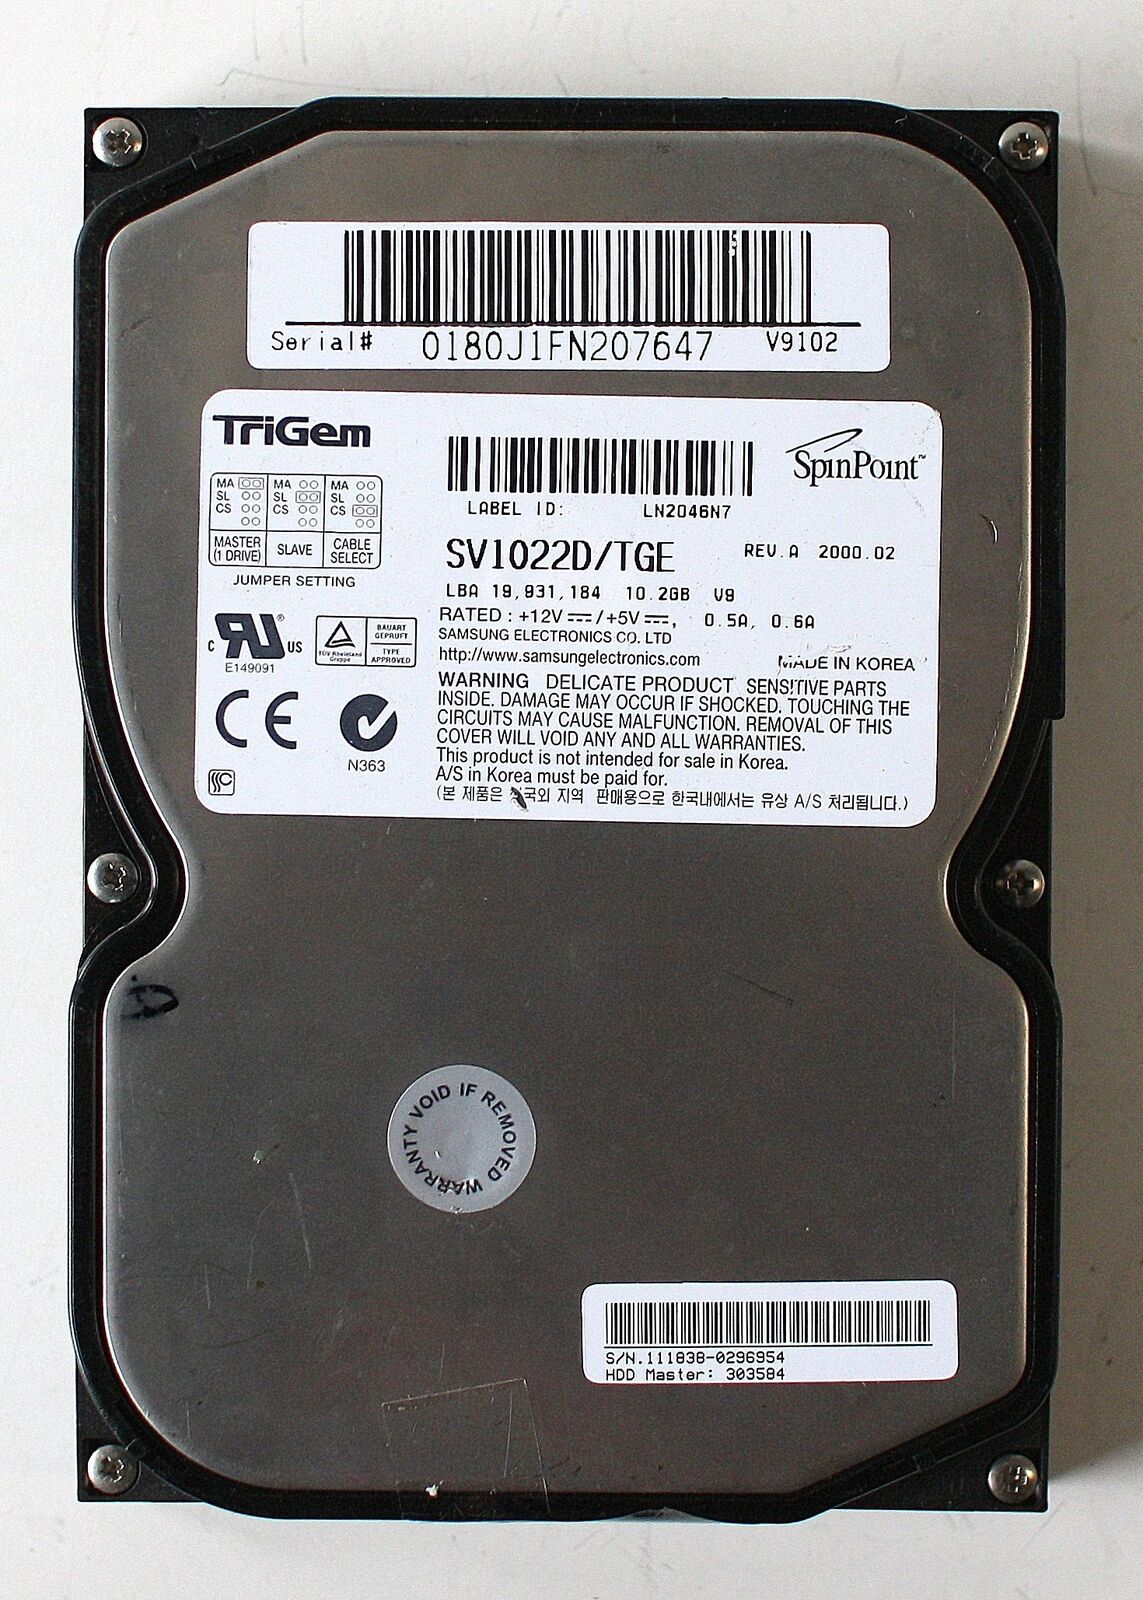 HDD 10.2GB TRIGEM SPINPOINT, IDE, SV1022D/TGE REV.A